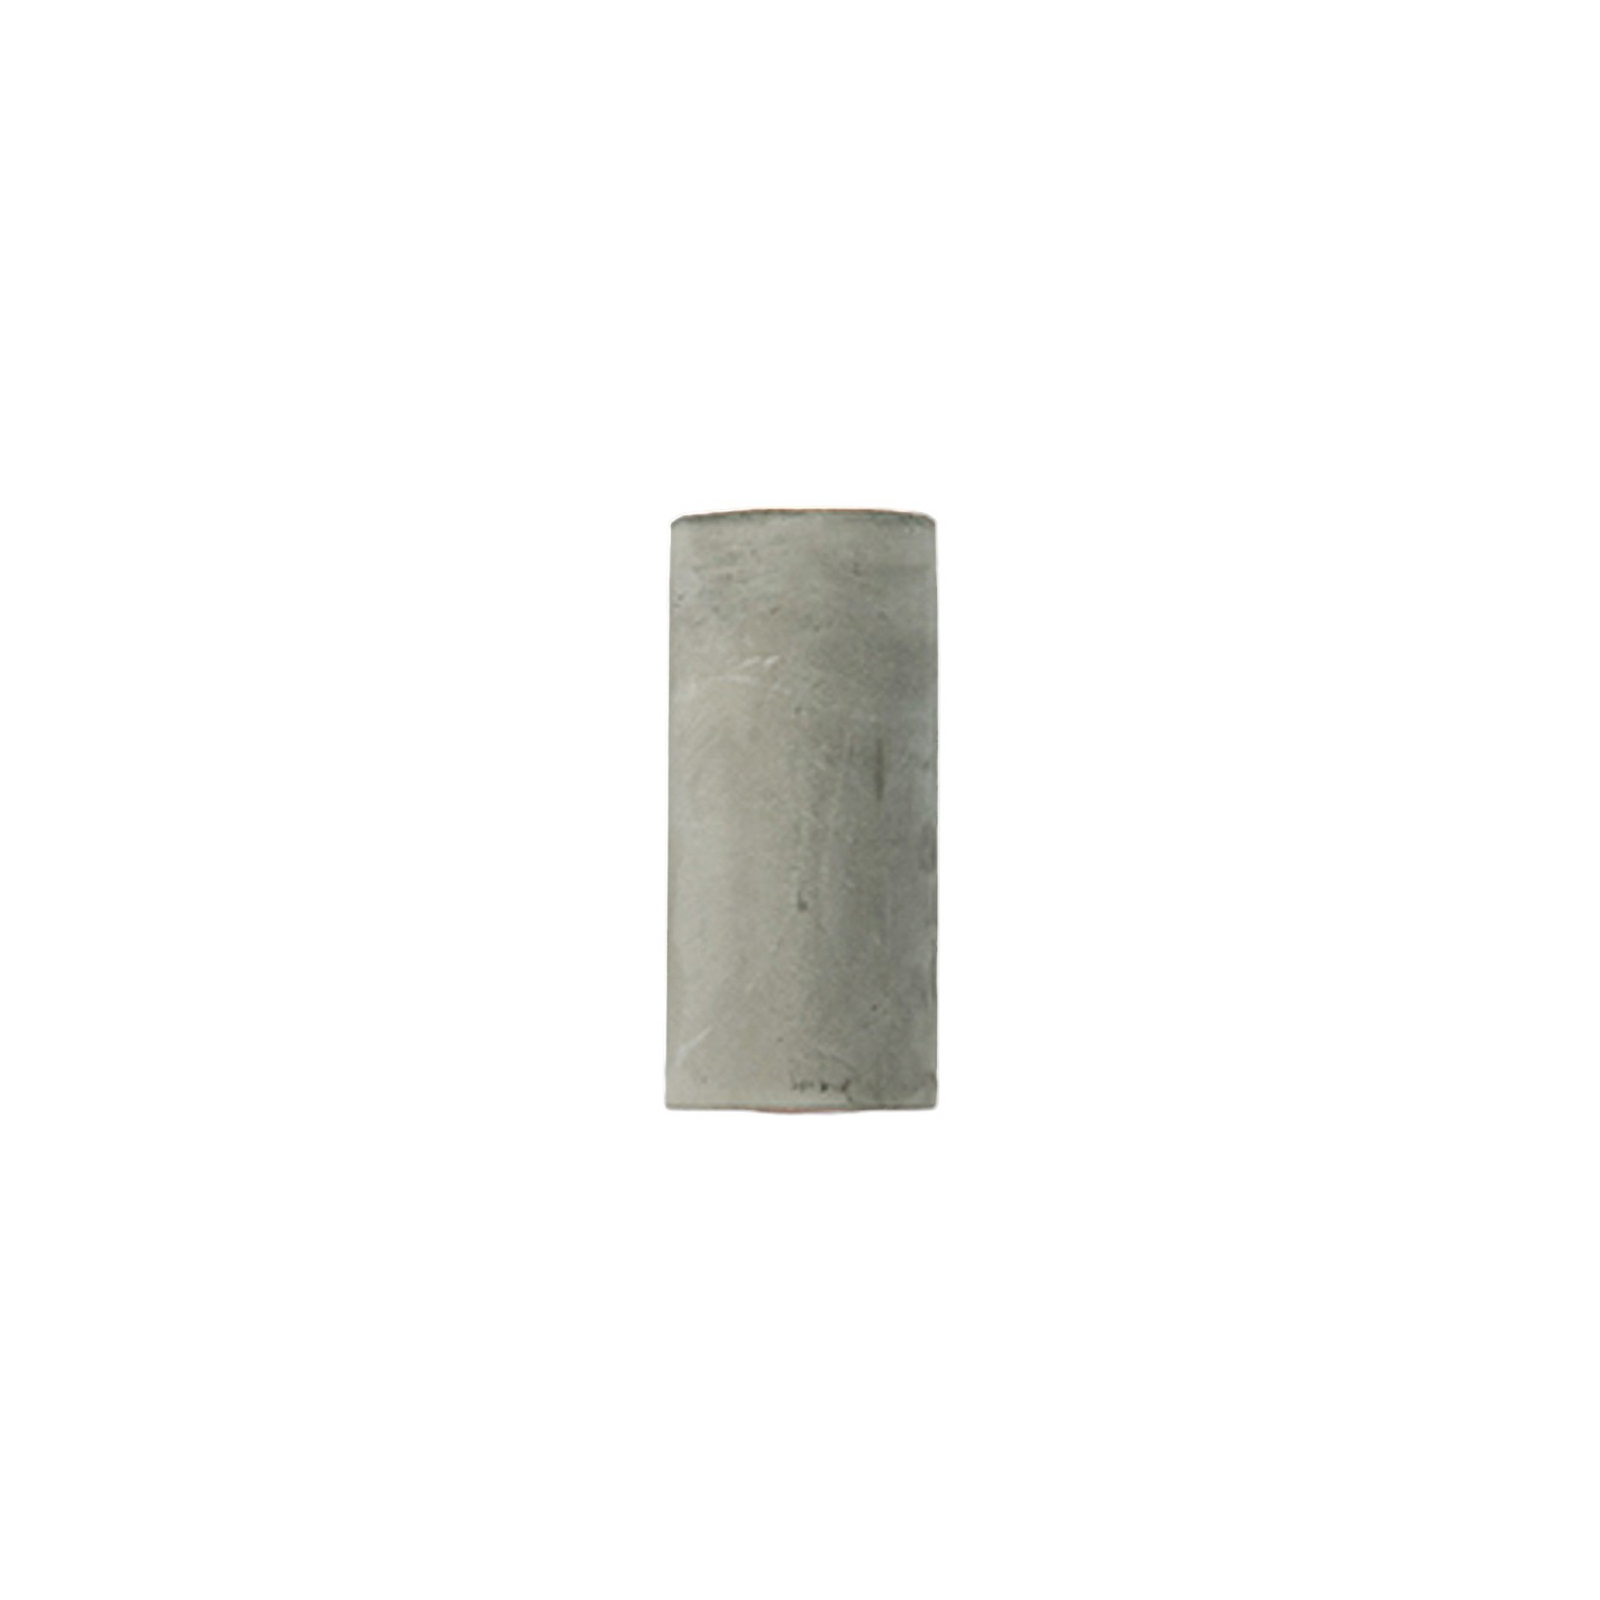 Wandlamp 180022 van beton up/down Ø 7,5 cm